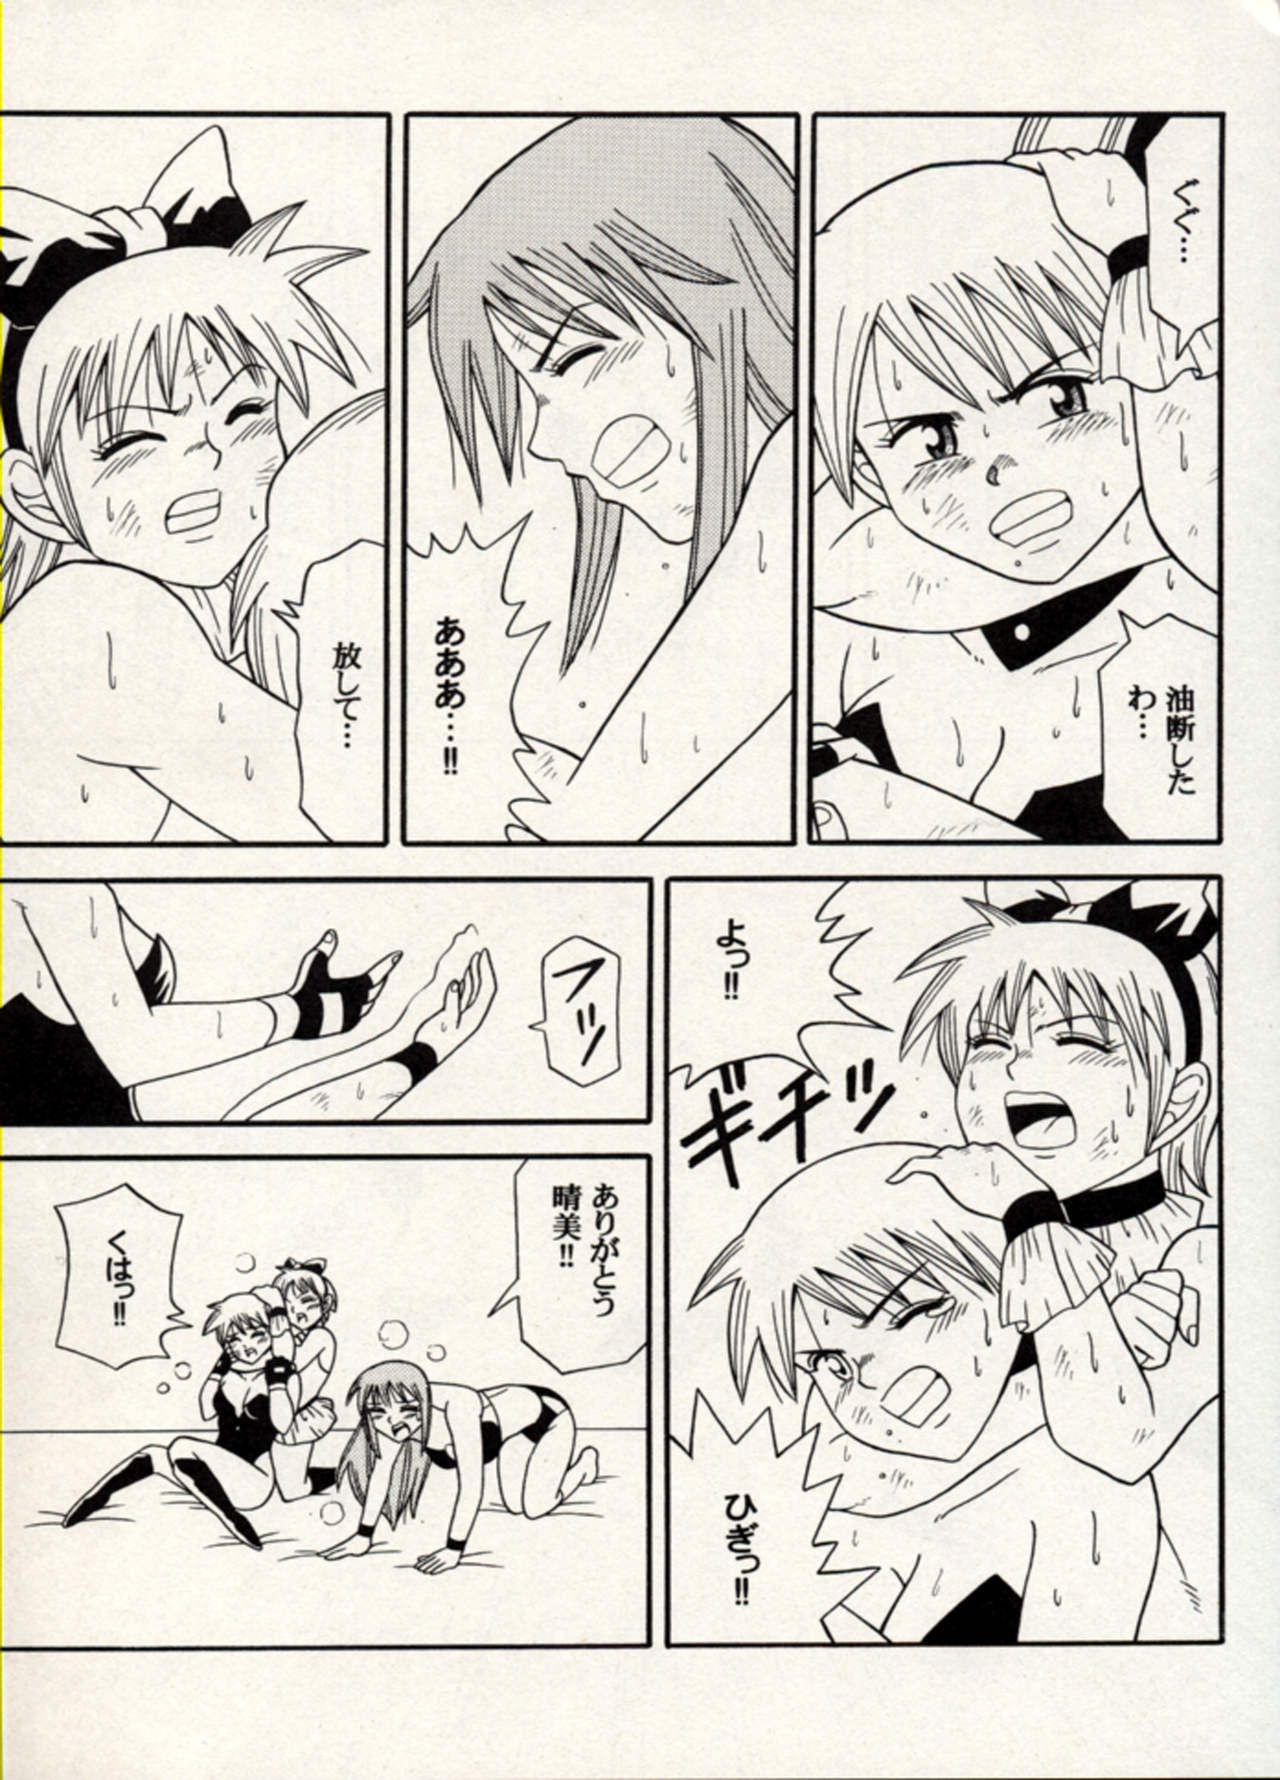 Manga Battle Volume 15 15